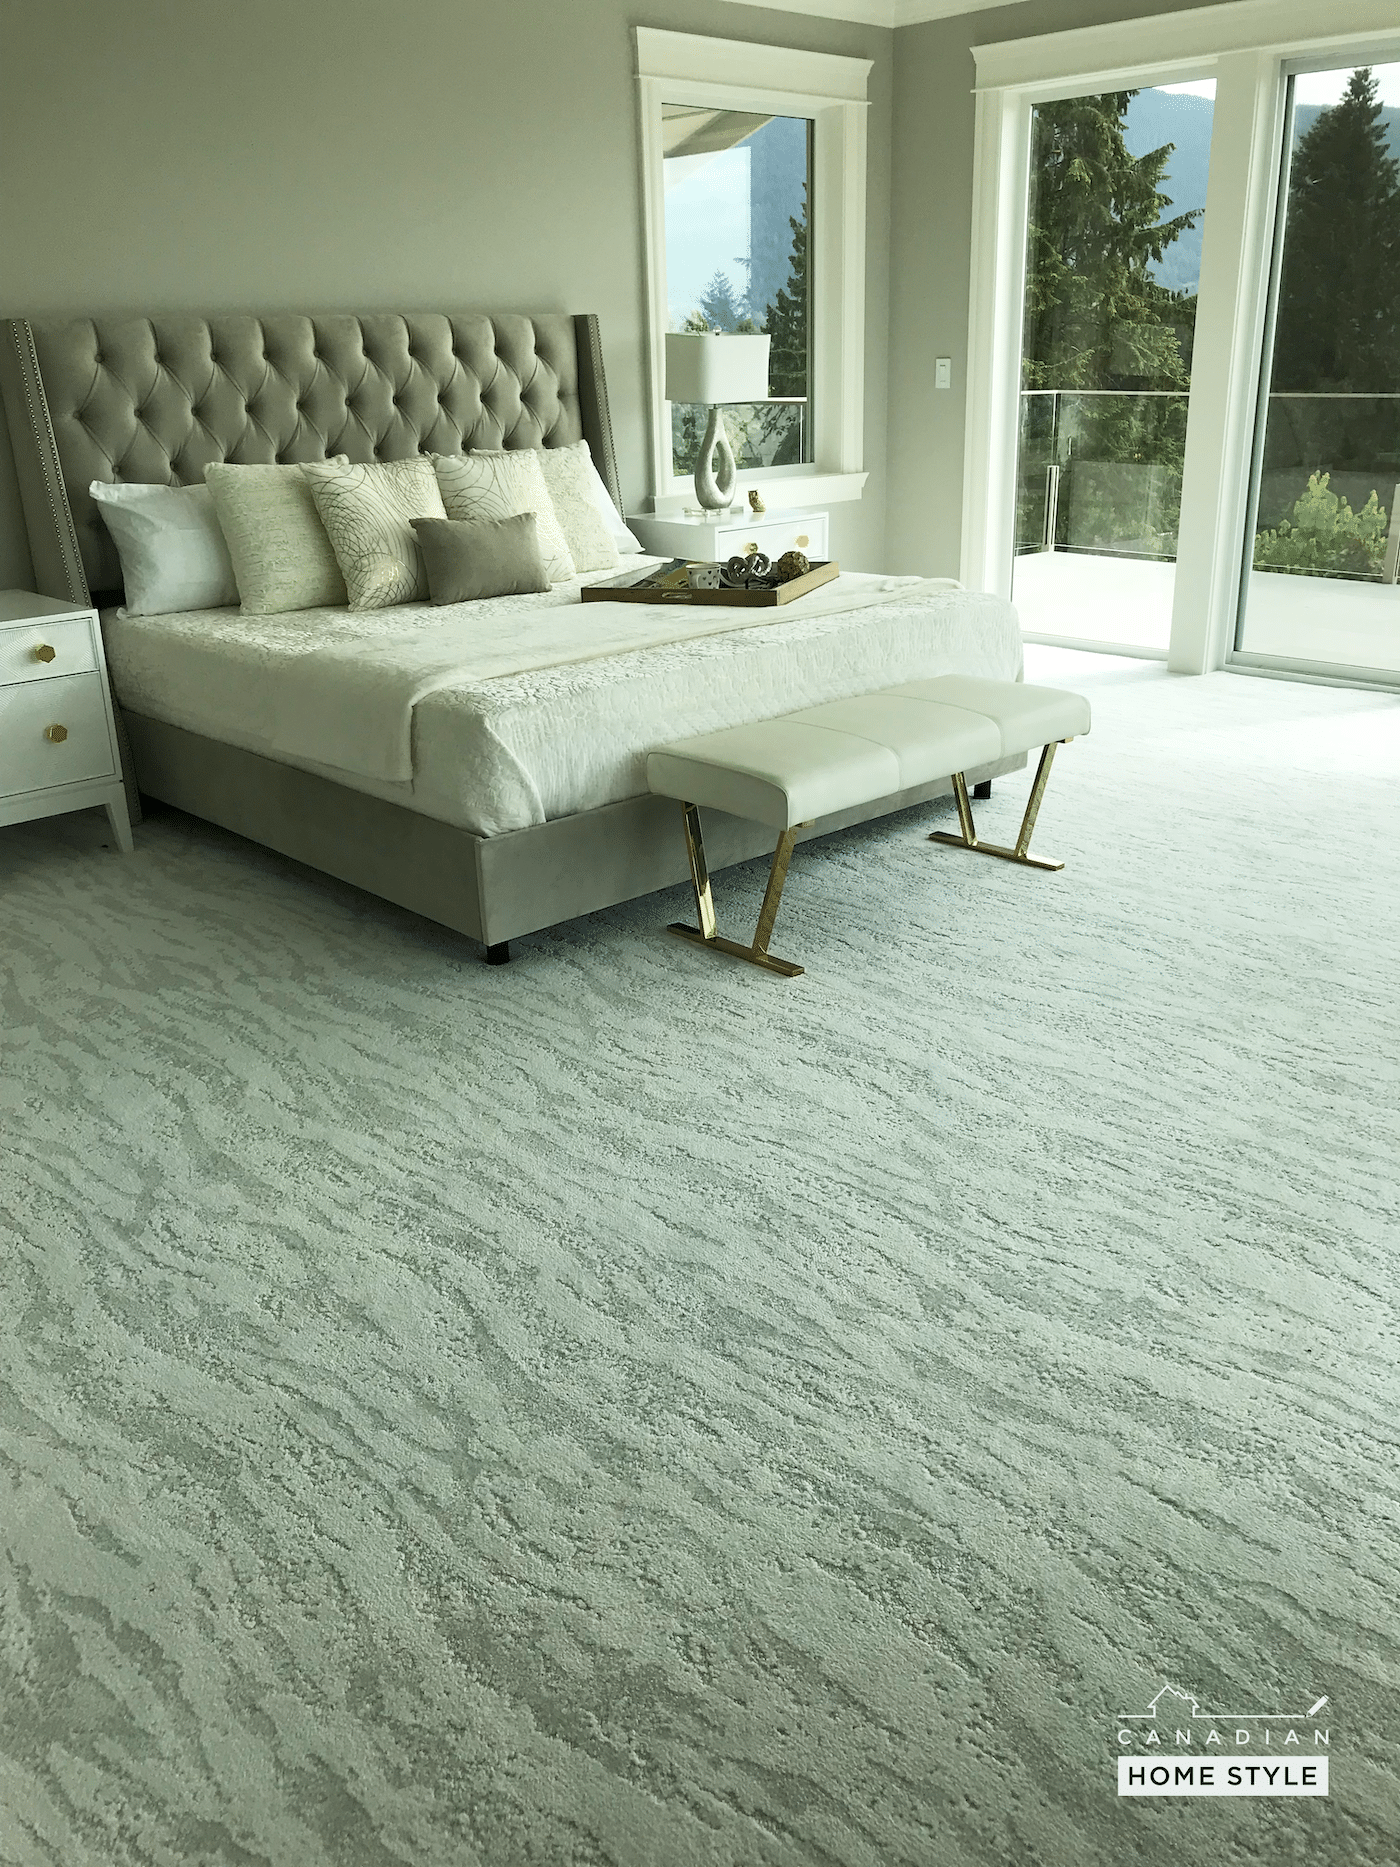 Vancouver commercial carpet solutions